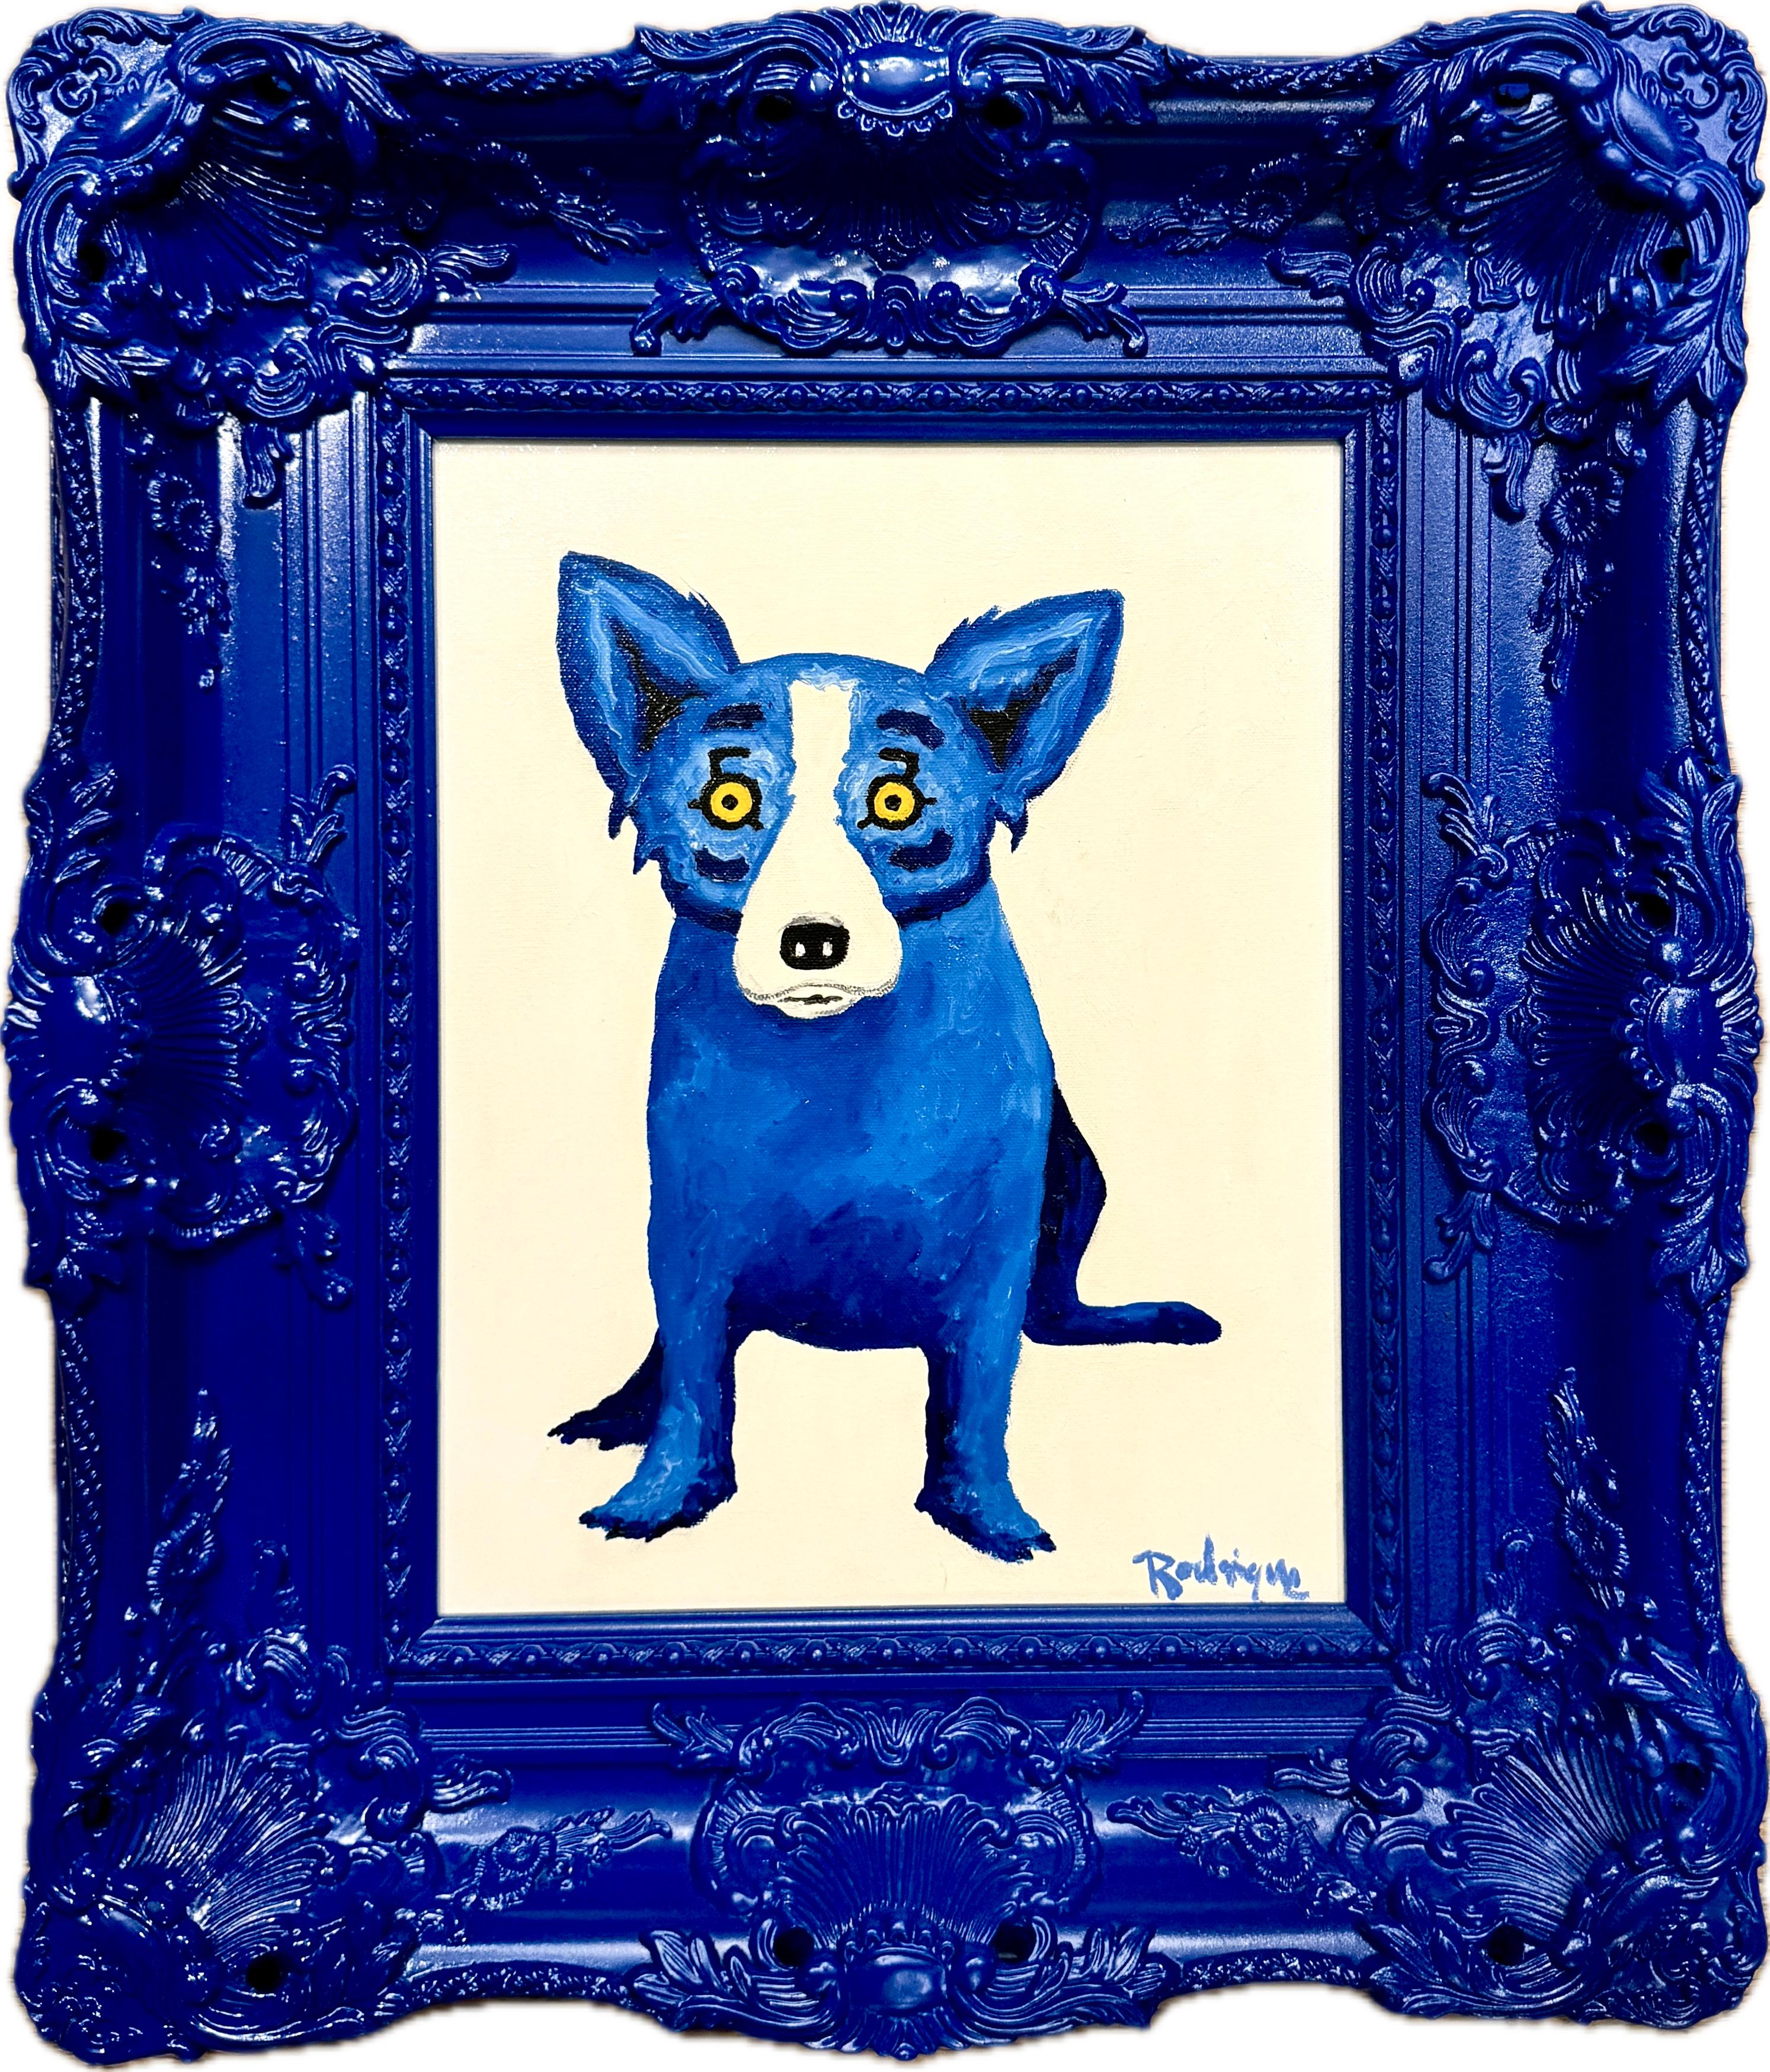 Animal Painting George Rodrigue - Chien bleu